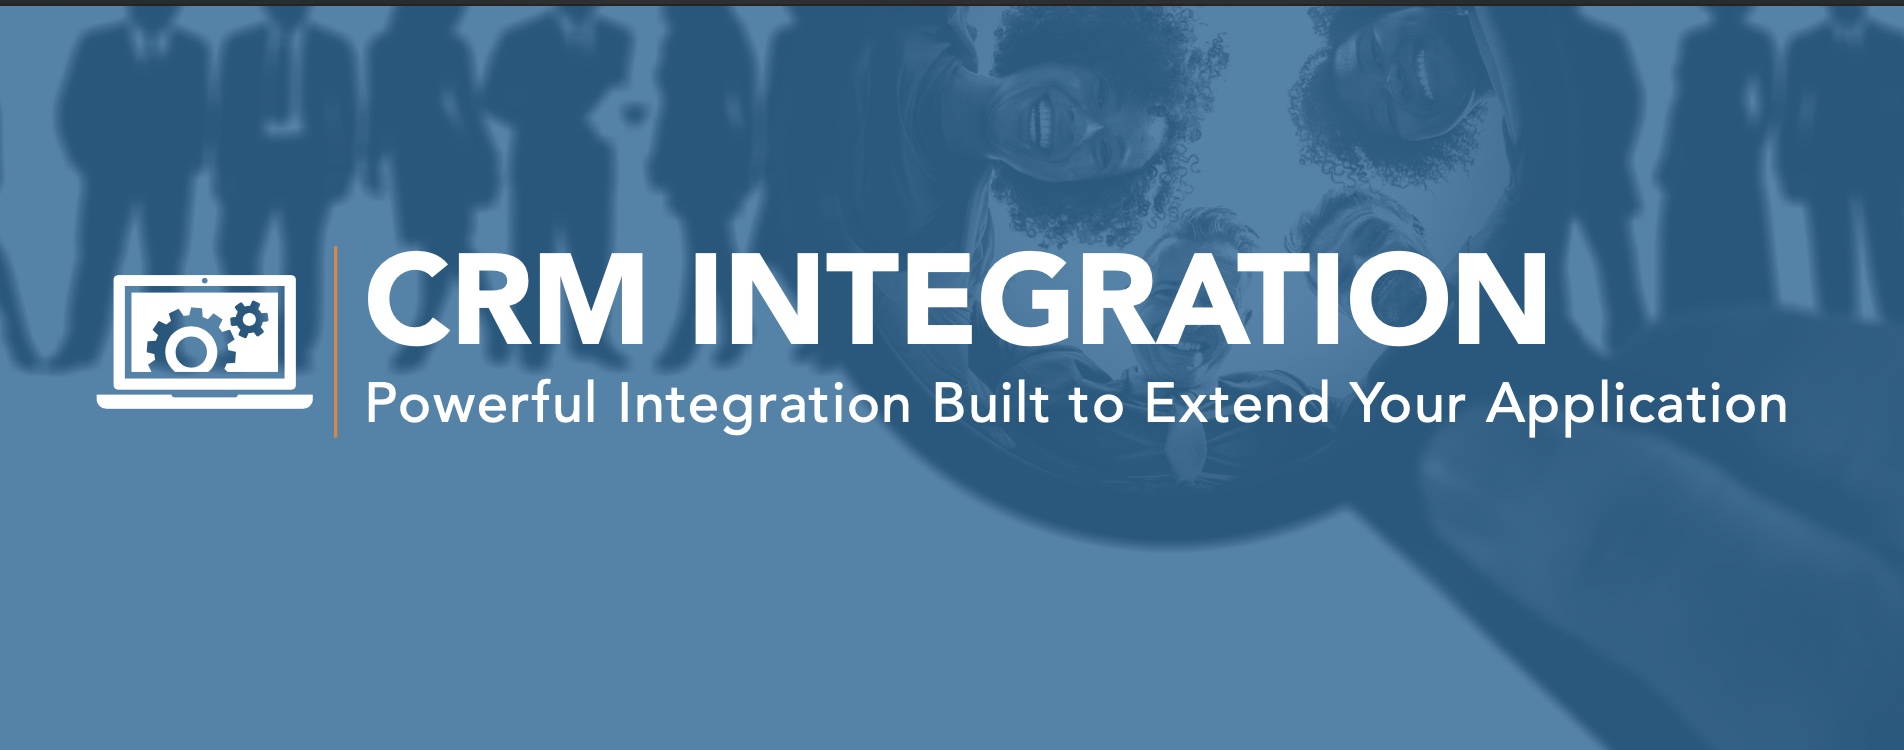 CRM Integration Data Sheet